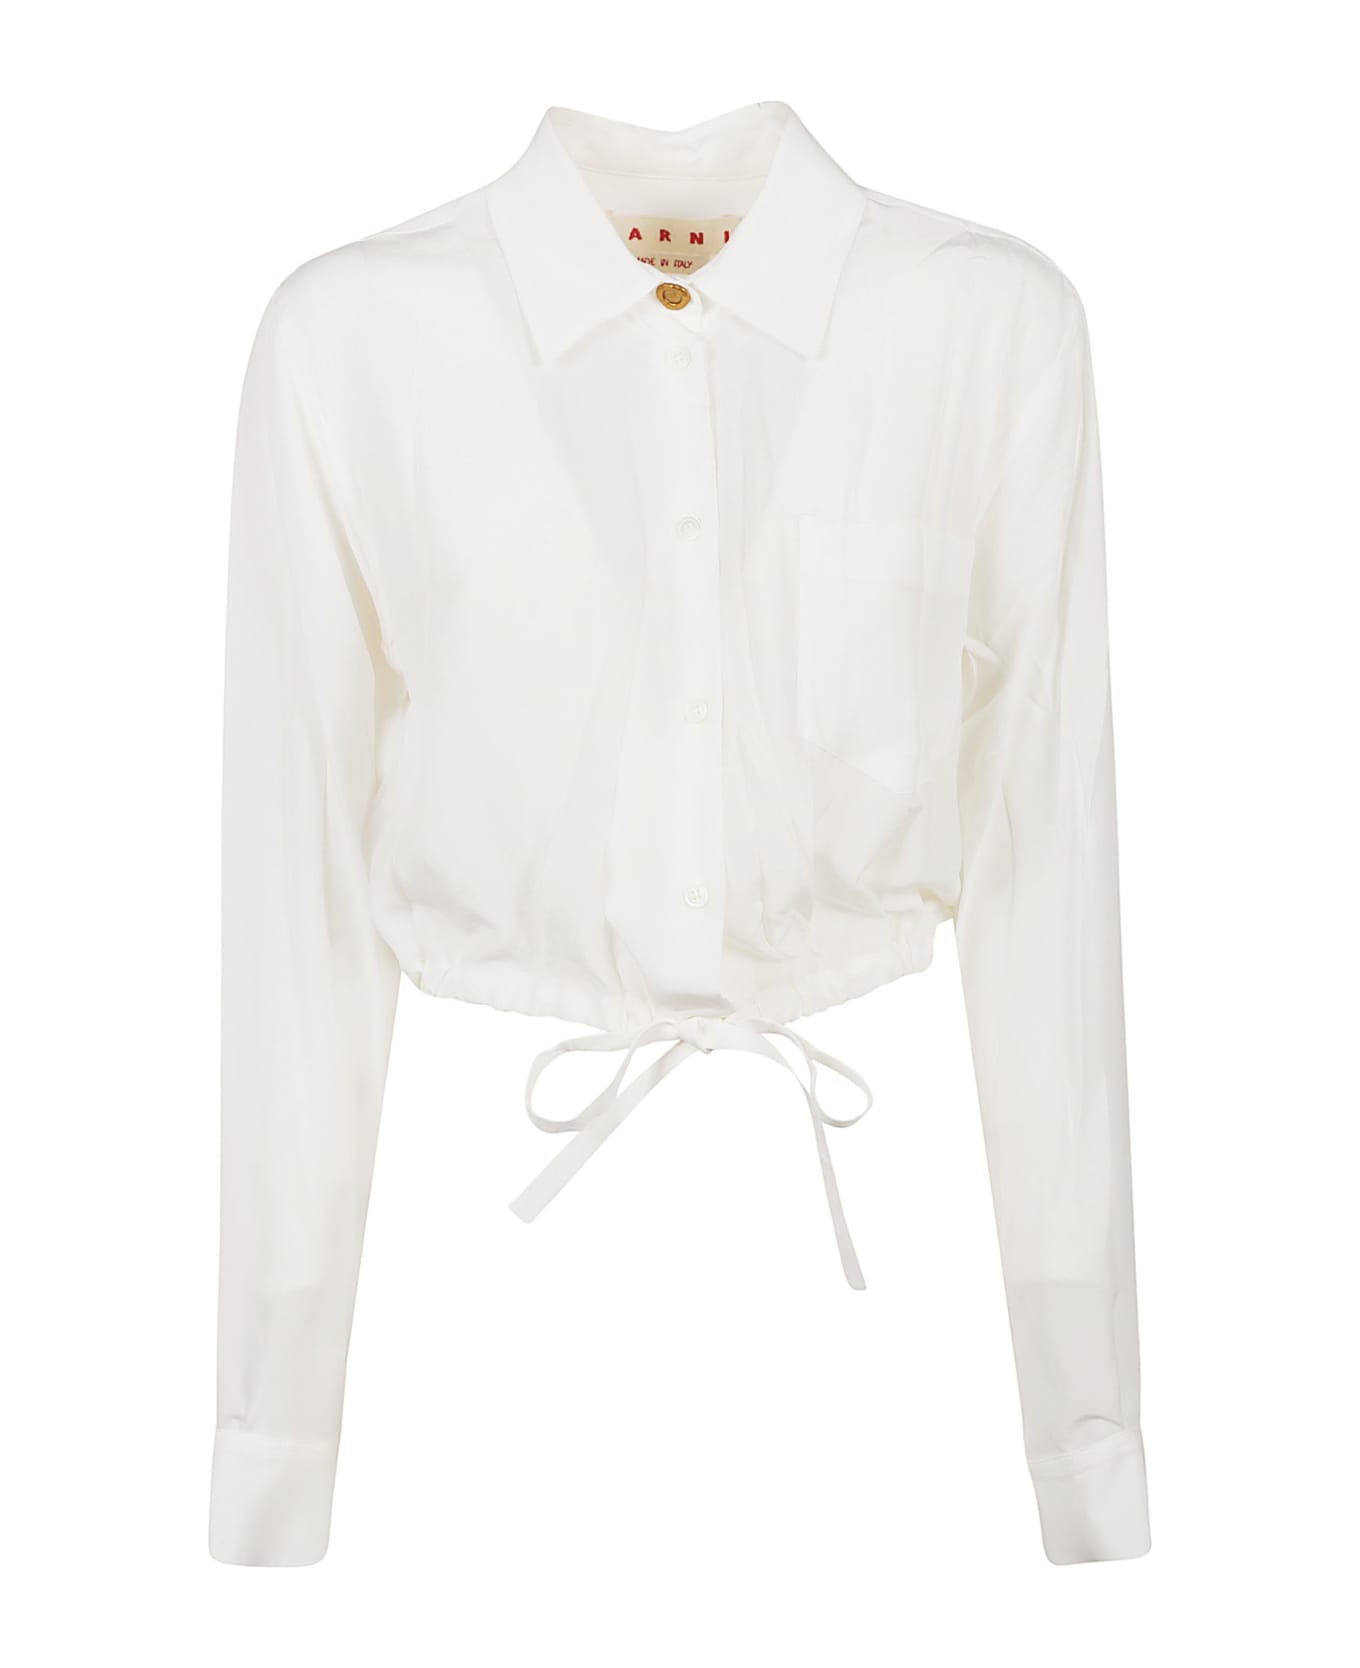 Marni Long Sleeve Shirt - Stone White